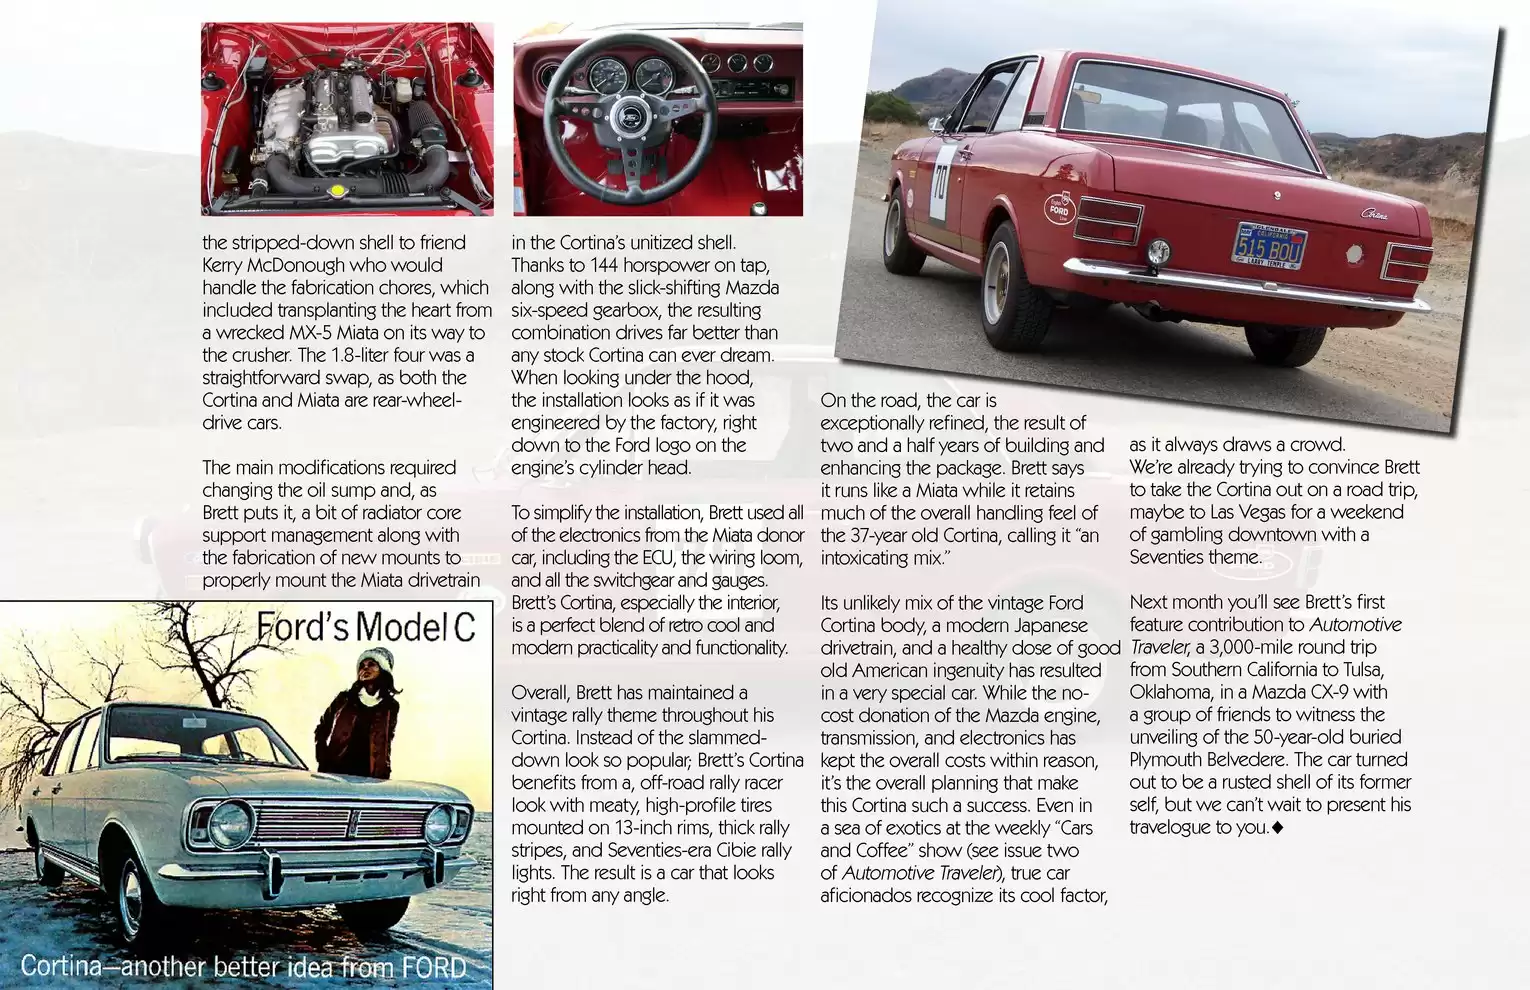 Automotive Traveler Magazine: Vol 1 Iss 3 Page 115